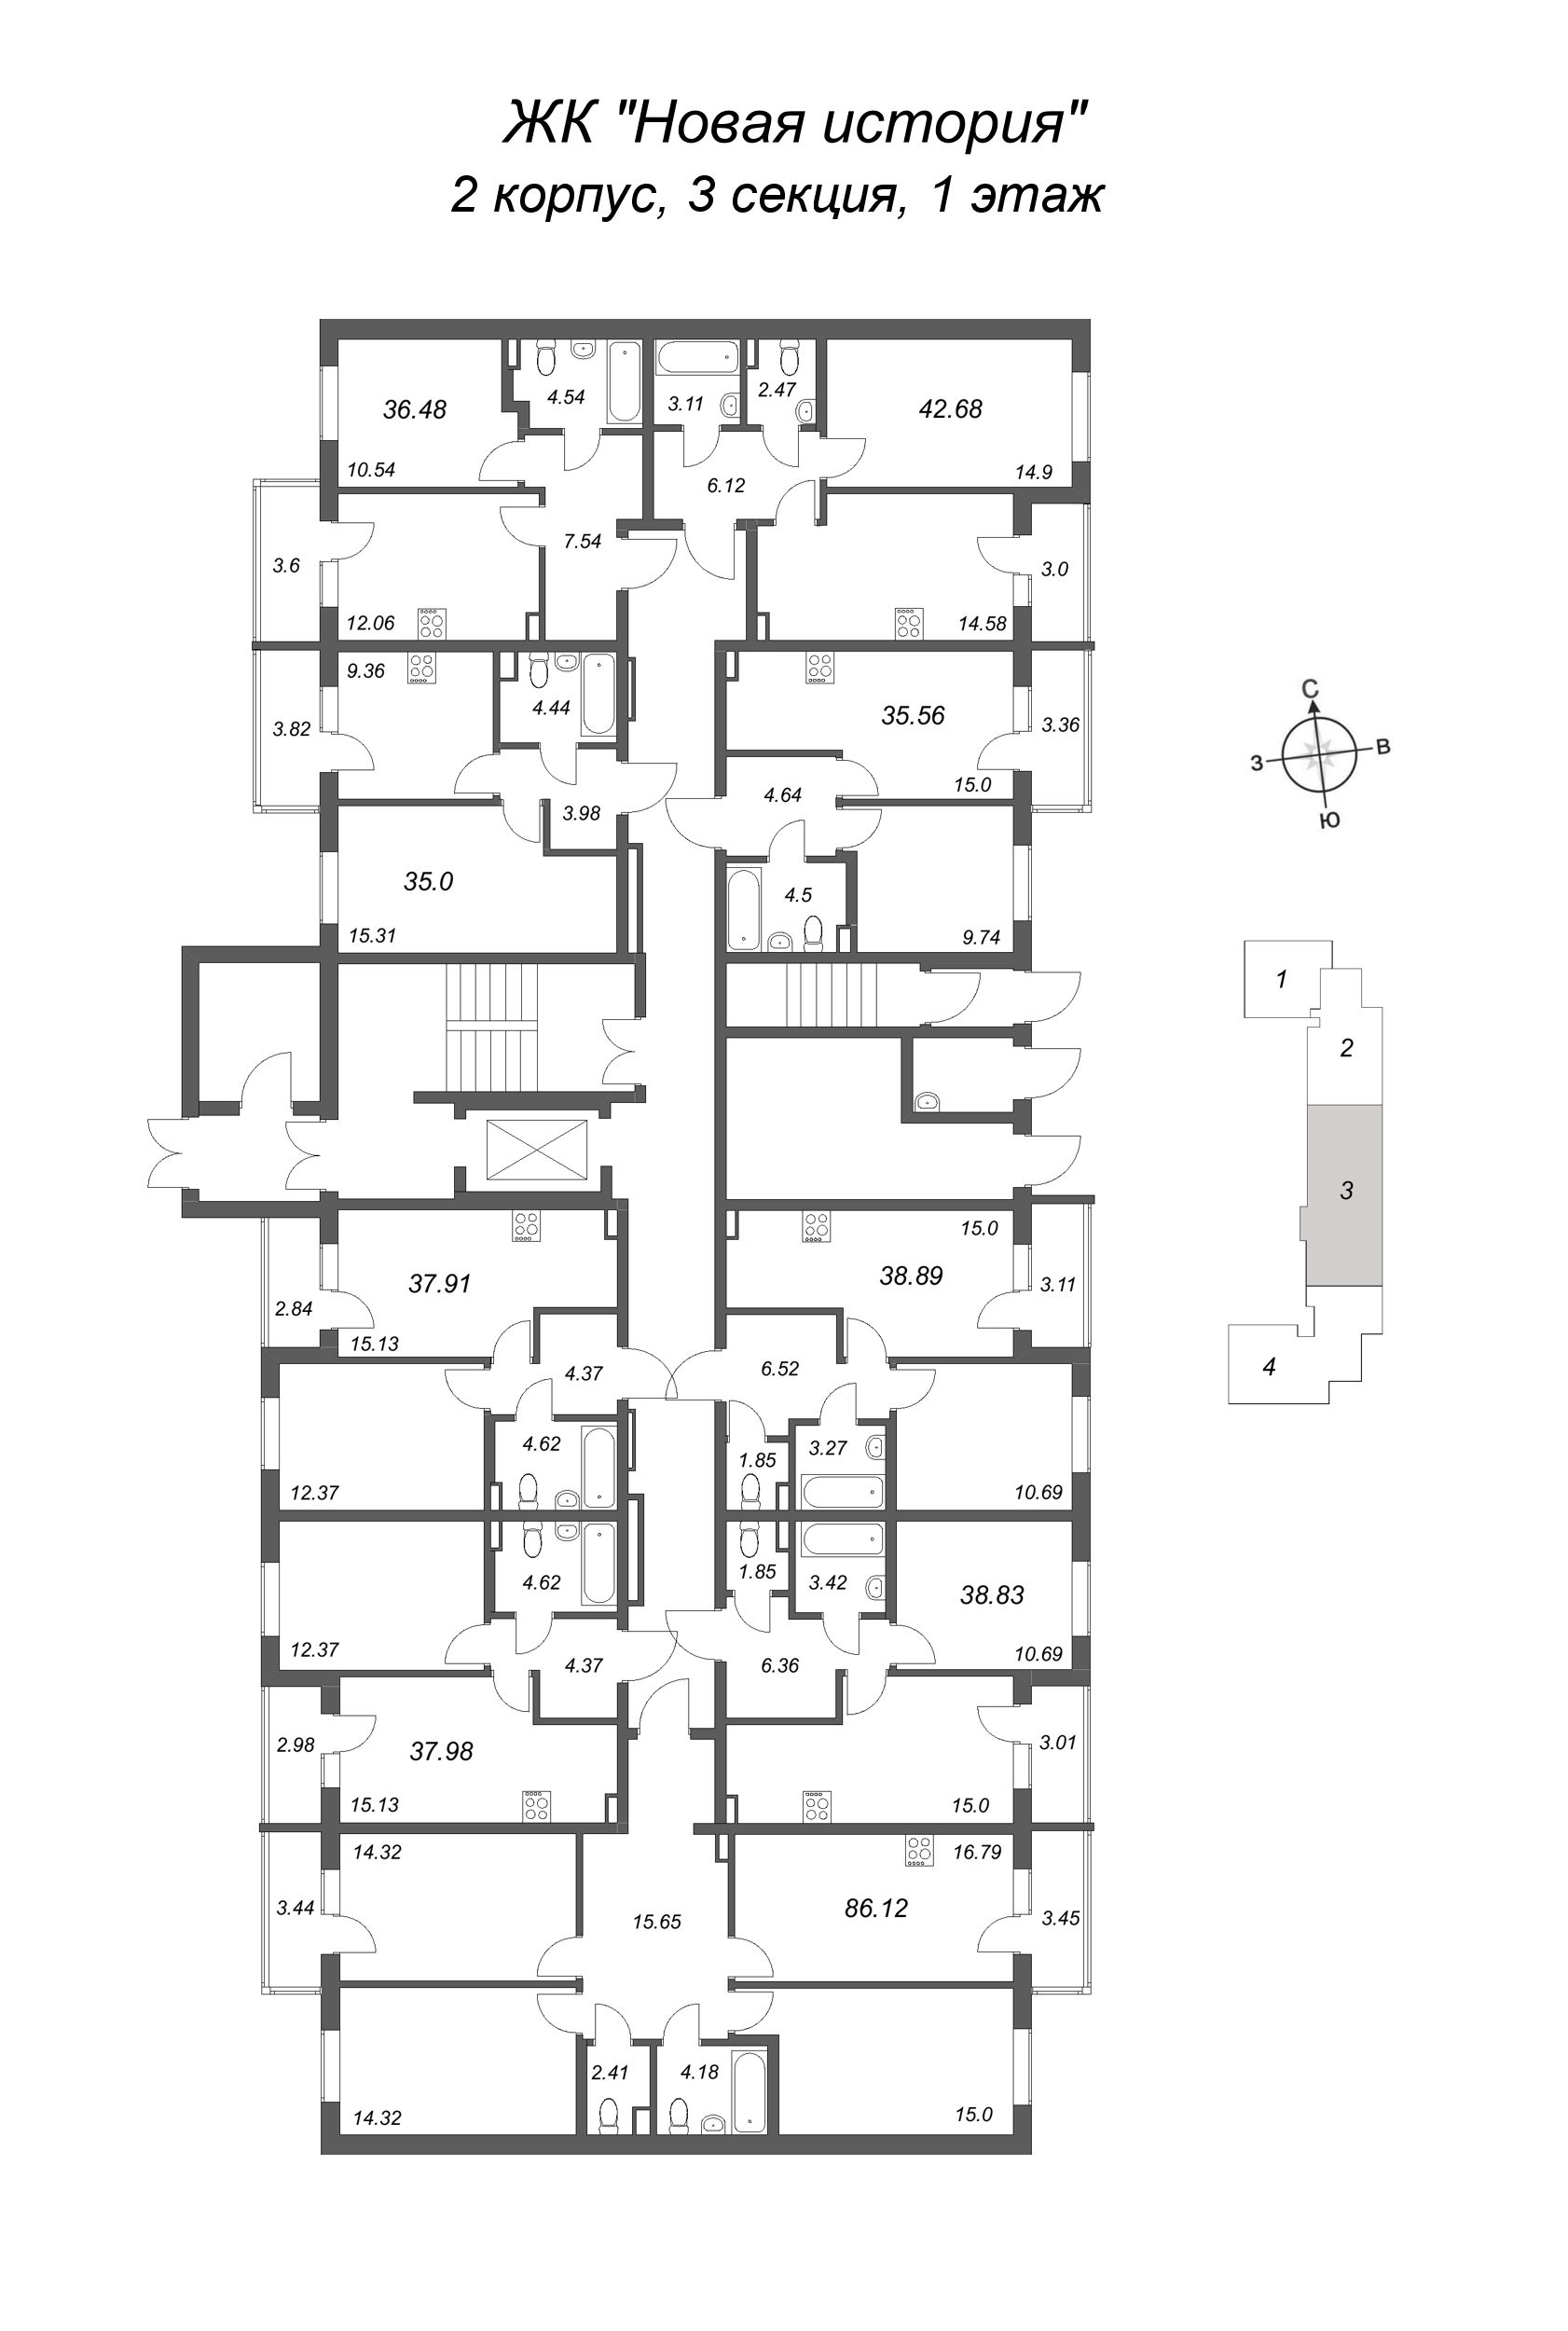 2-комнатная (Евро) квартира, 37.91 м² - планировка этажа